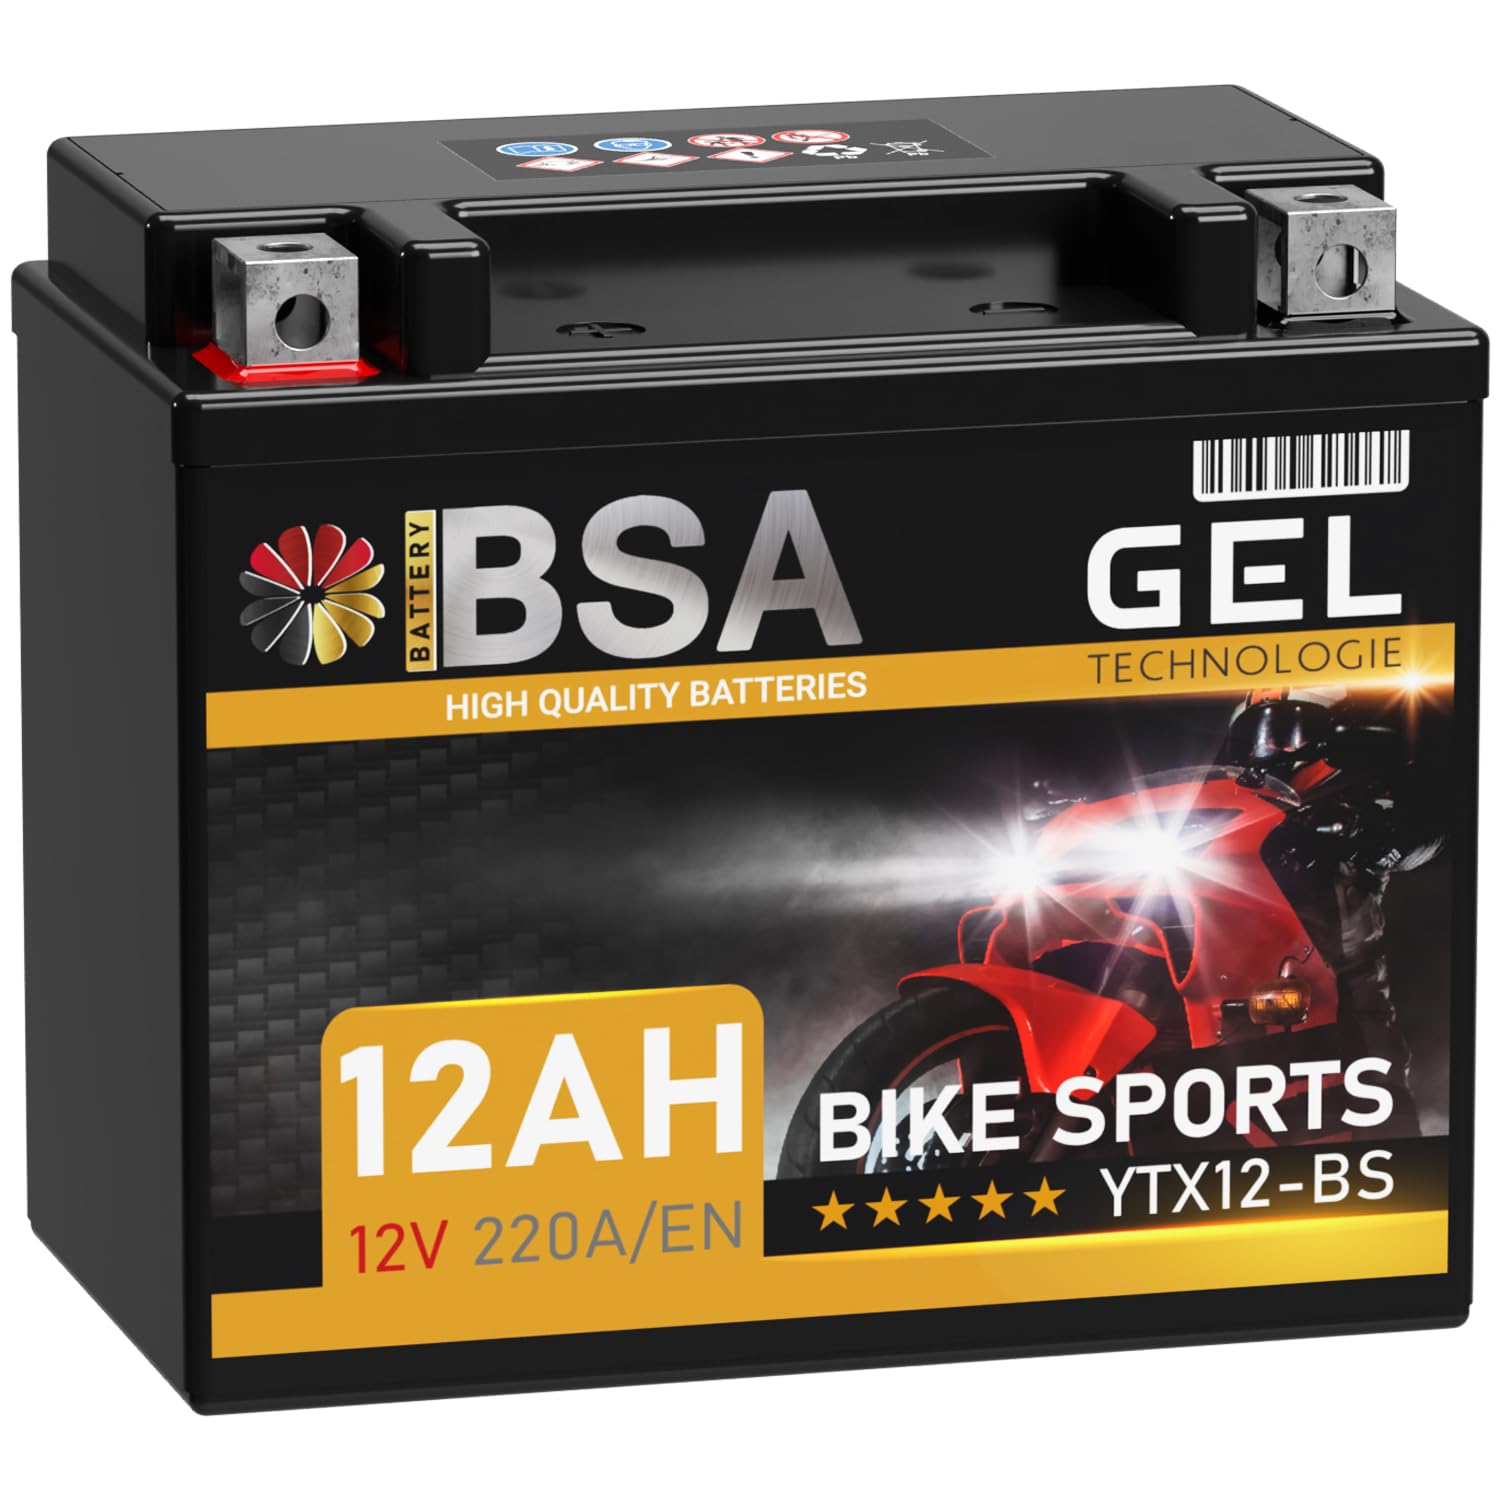 BSA YTX12-BS GEL Roller Batterie 12V 12Ah 220A/EN Motorradbatterie doppelte Lebensdauer entspricht CTX12-BS 51012 GTX12-BS Quad vorgeladen auslaufsicher wartungsfrei